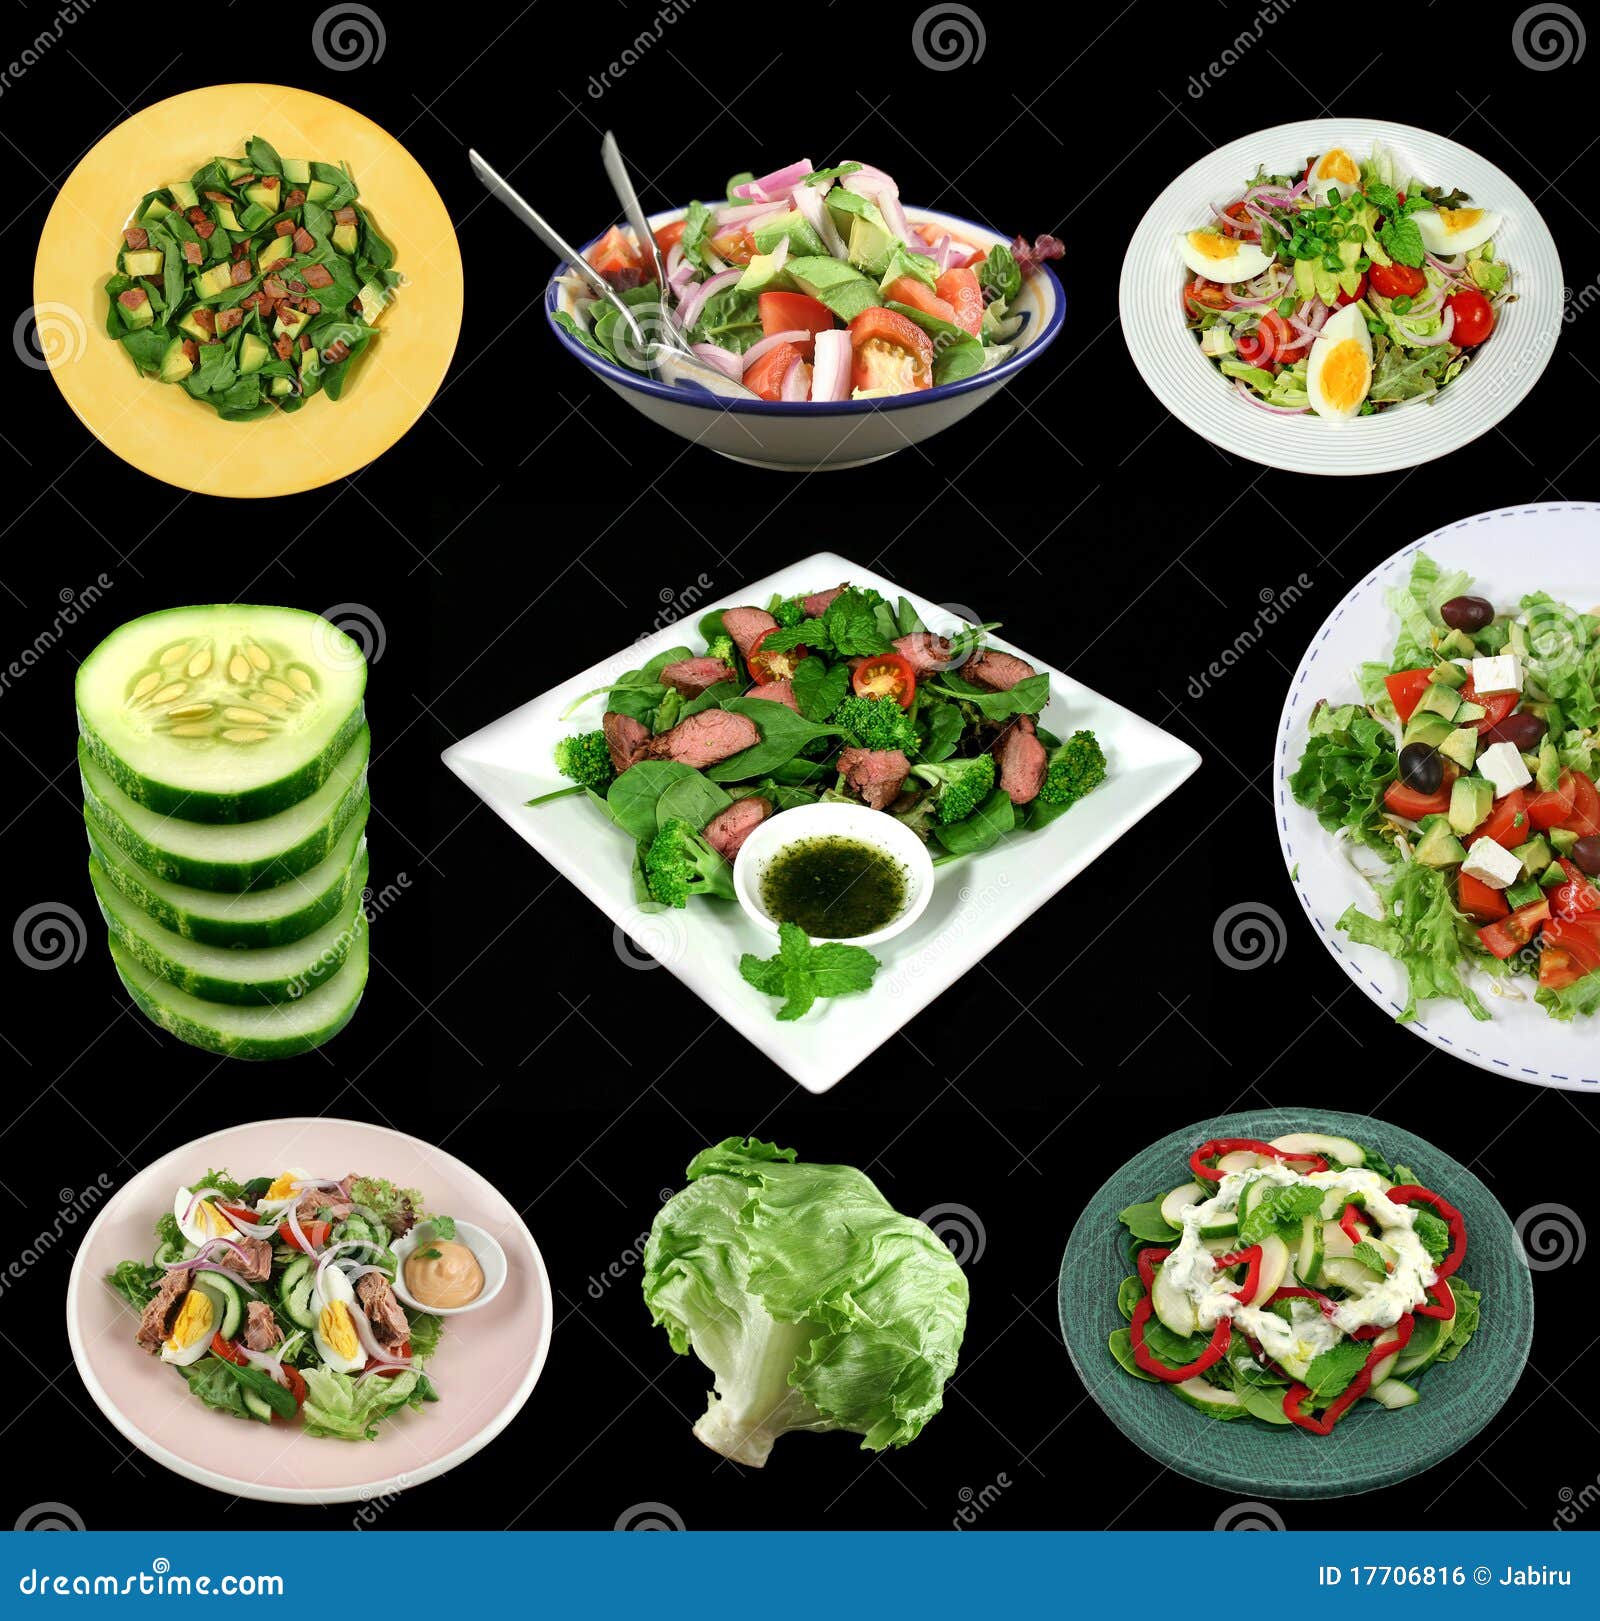 selection of salads